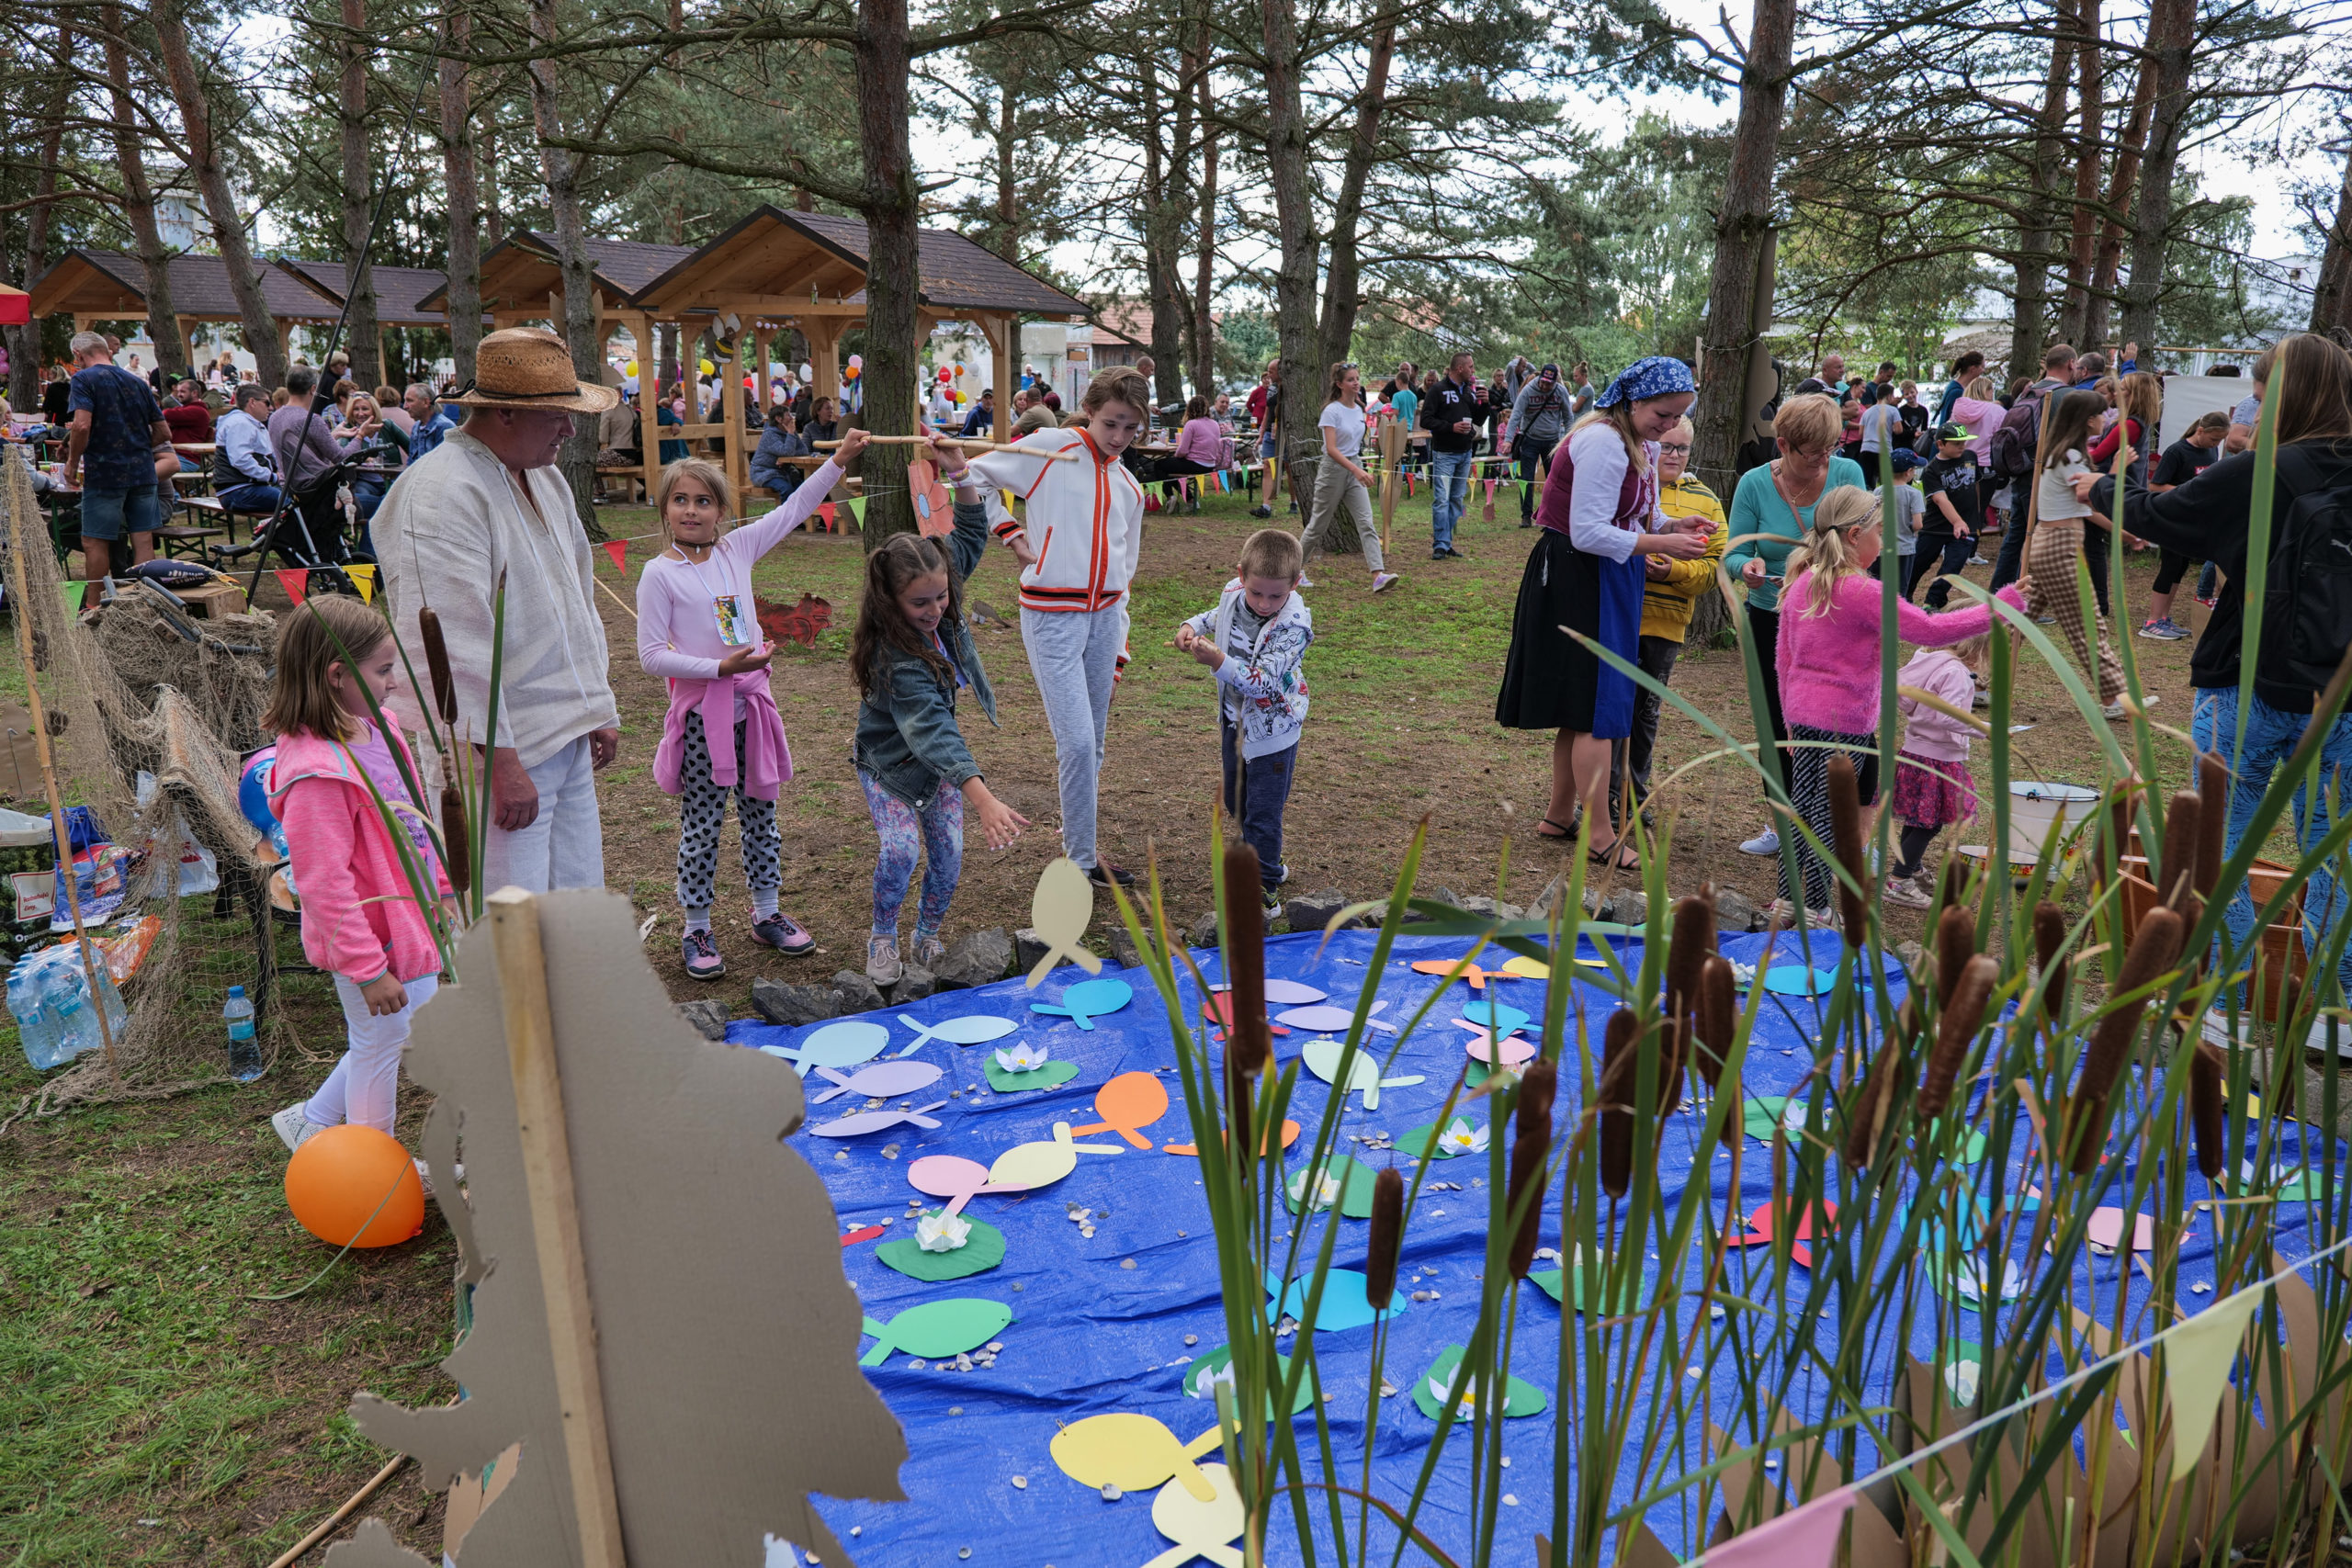 Detská udalosť cesta lesom/Event for kid in the forest